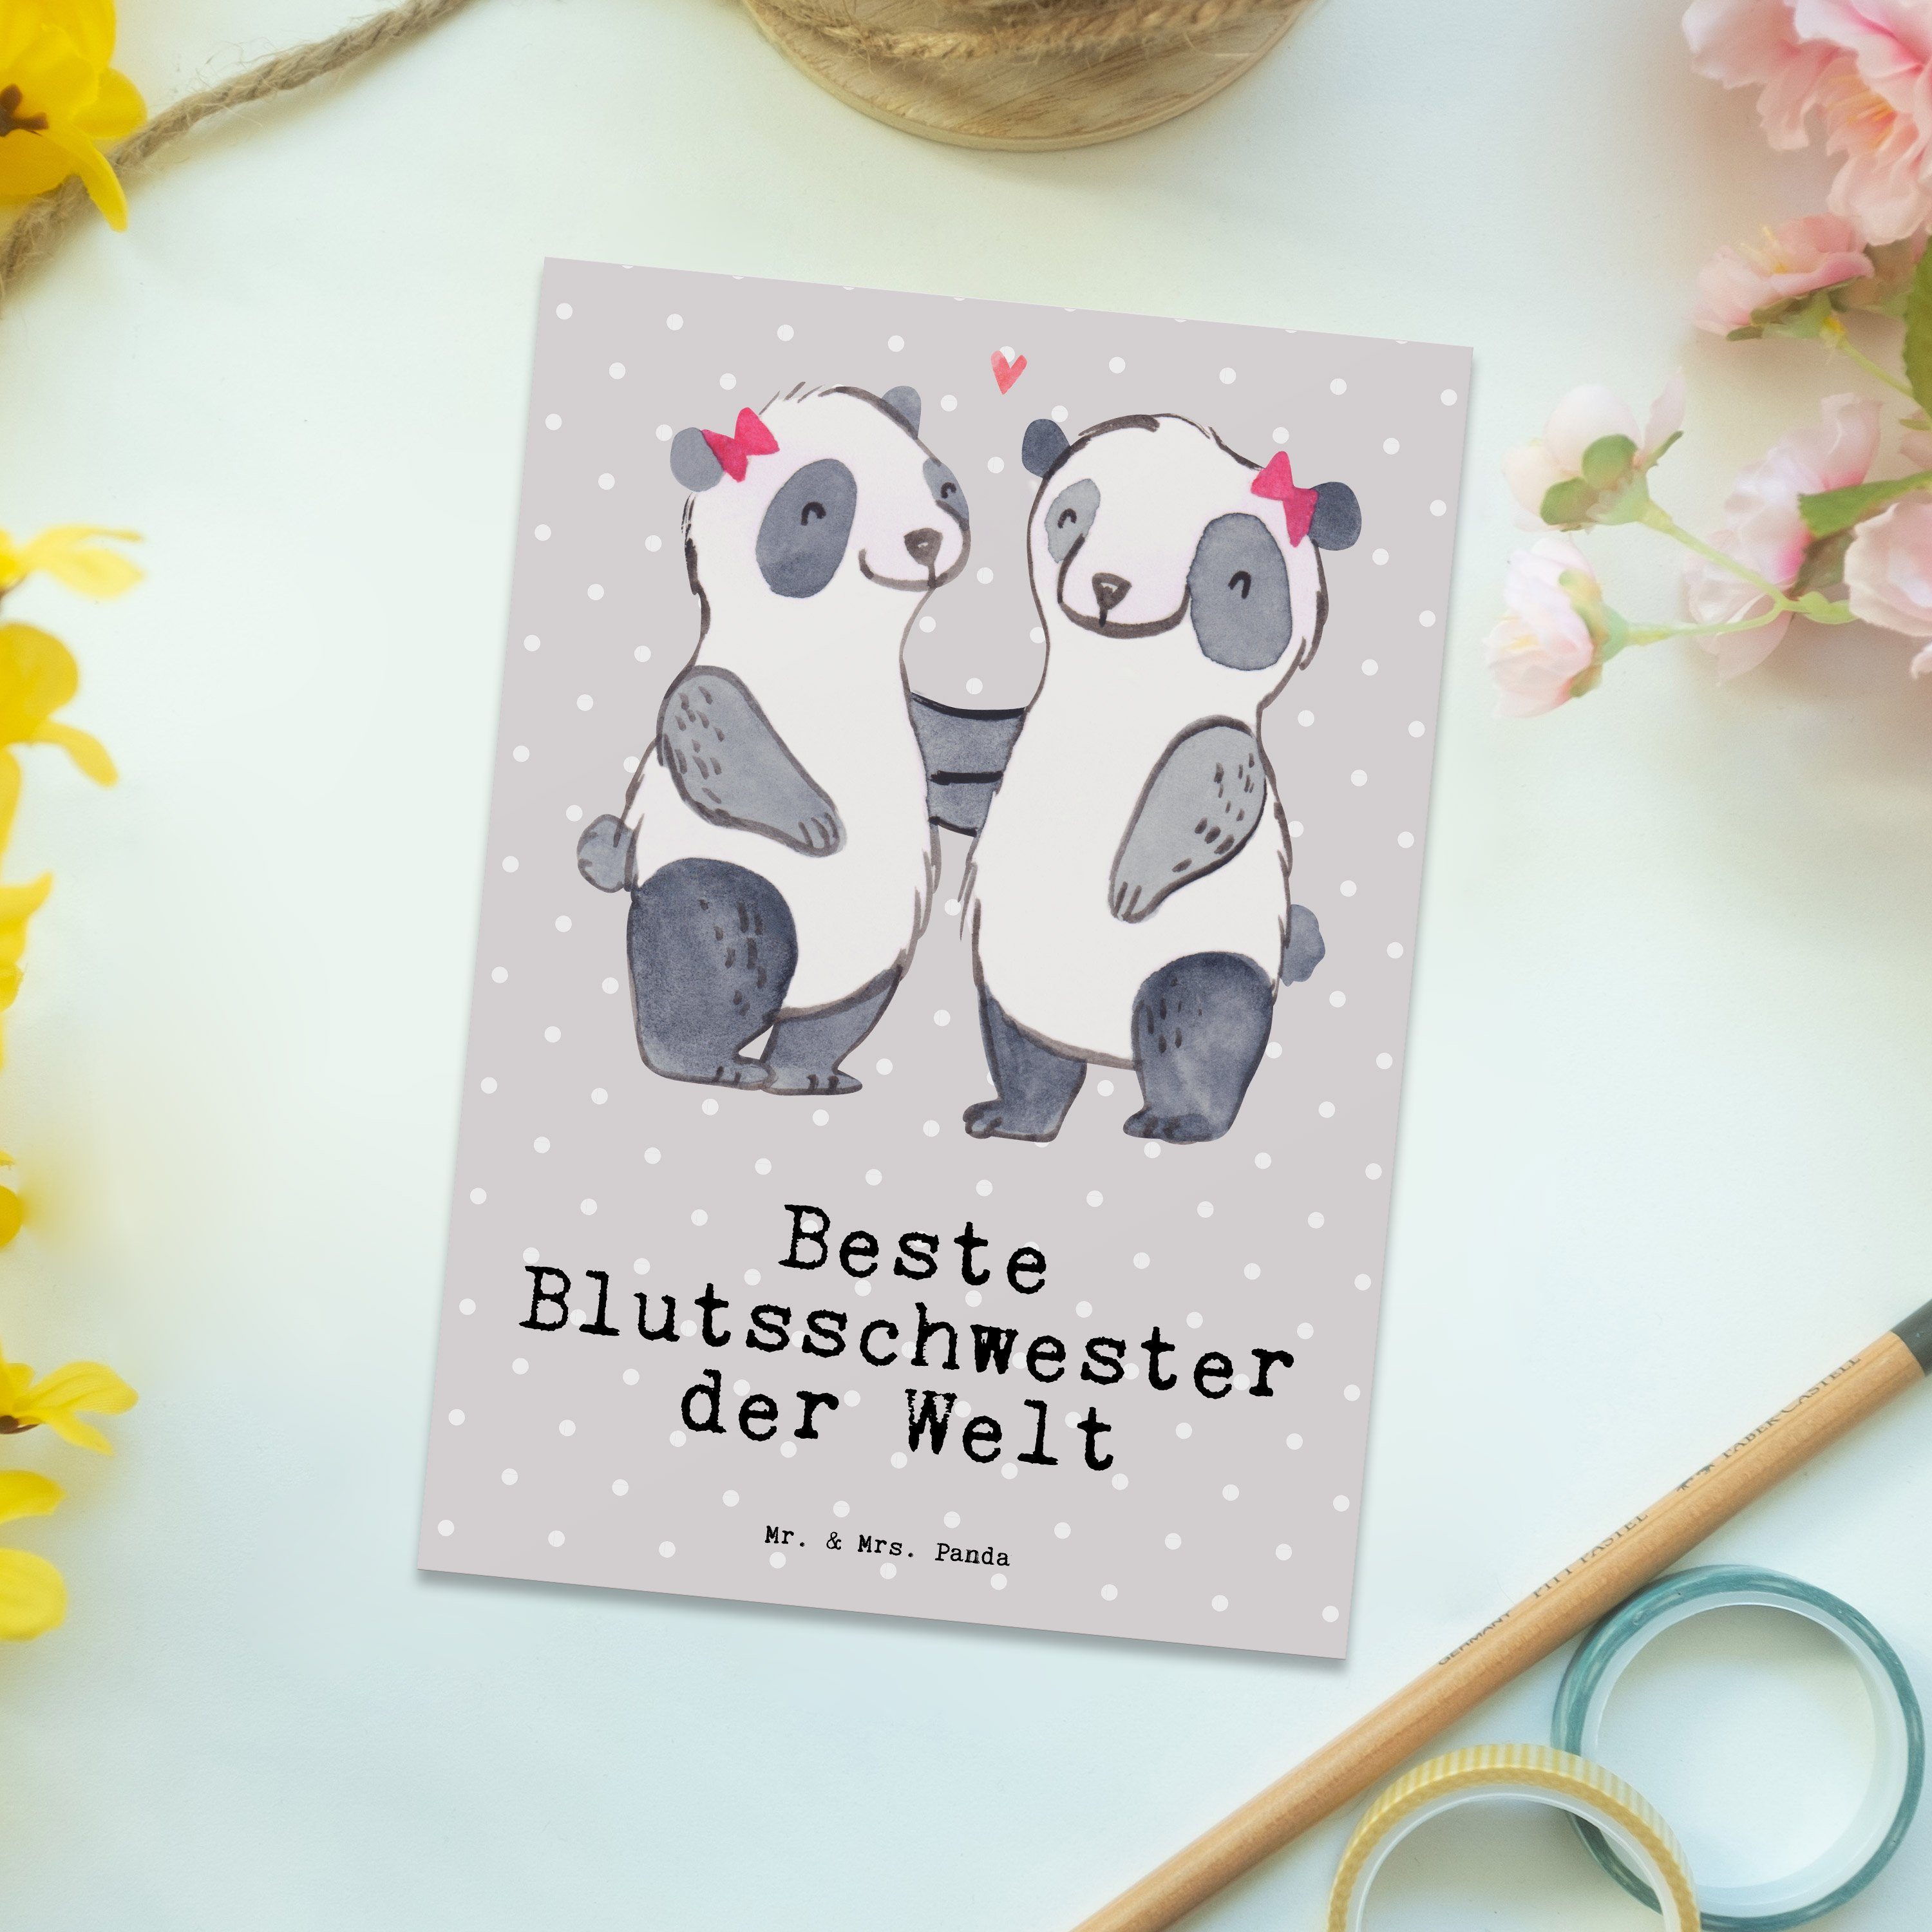 Mr. & Mrs. Pastell Geburt der Geschenk, Panda Postkarte Blutsschwester - Grau - Panda Beste Welt